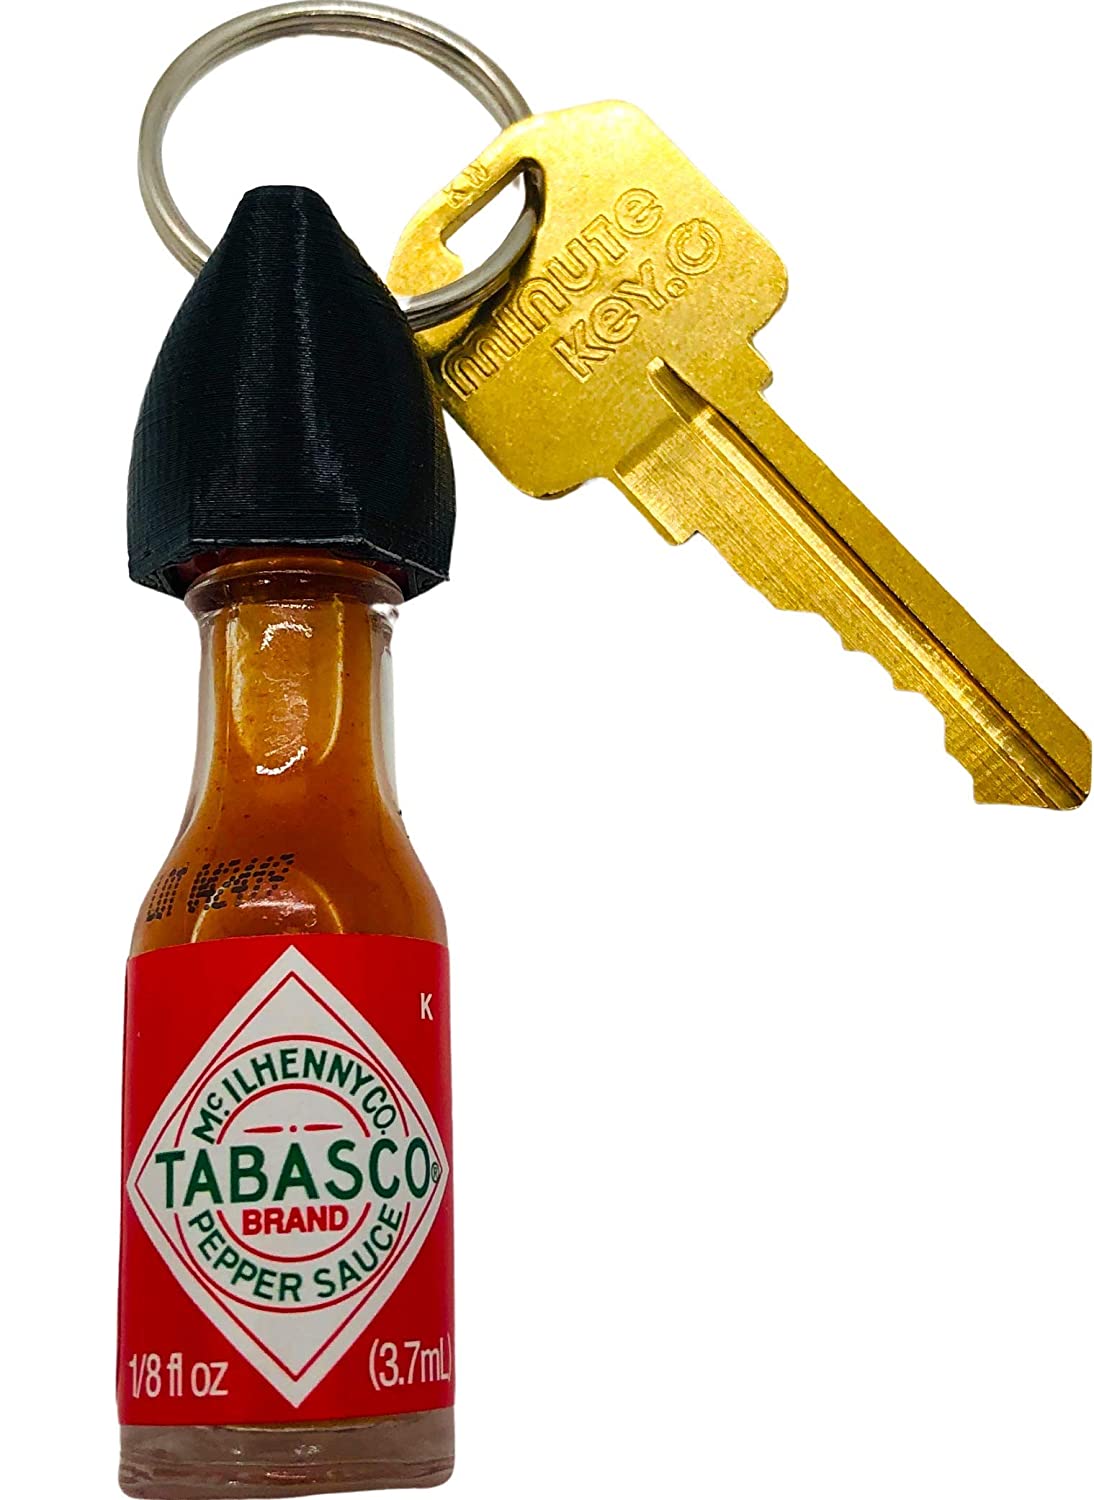 Tabasco Sauce Keychain - KibrisPDR